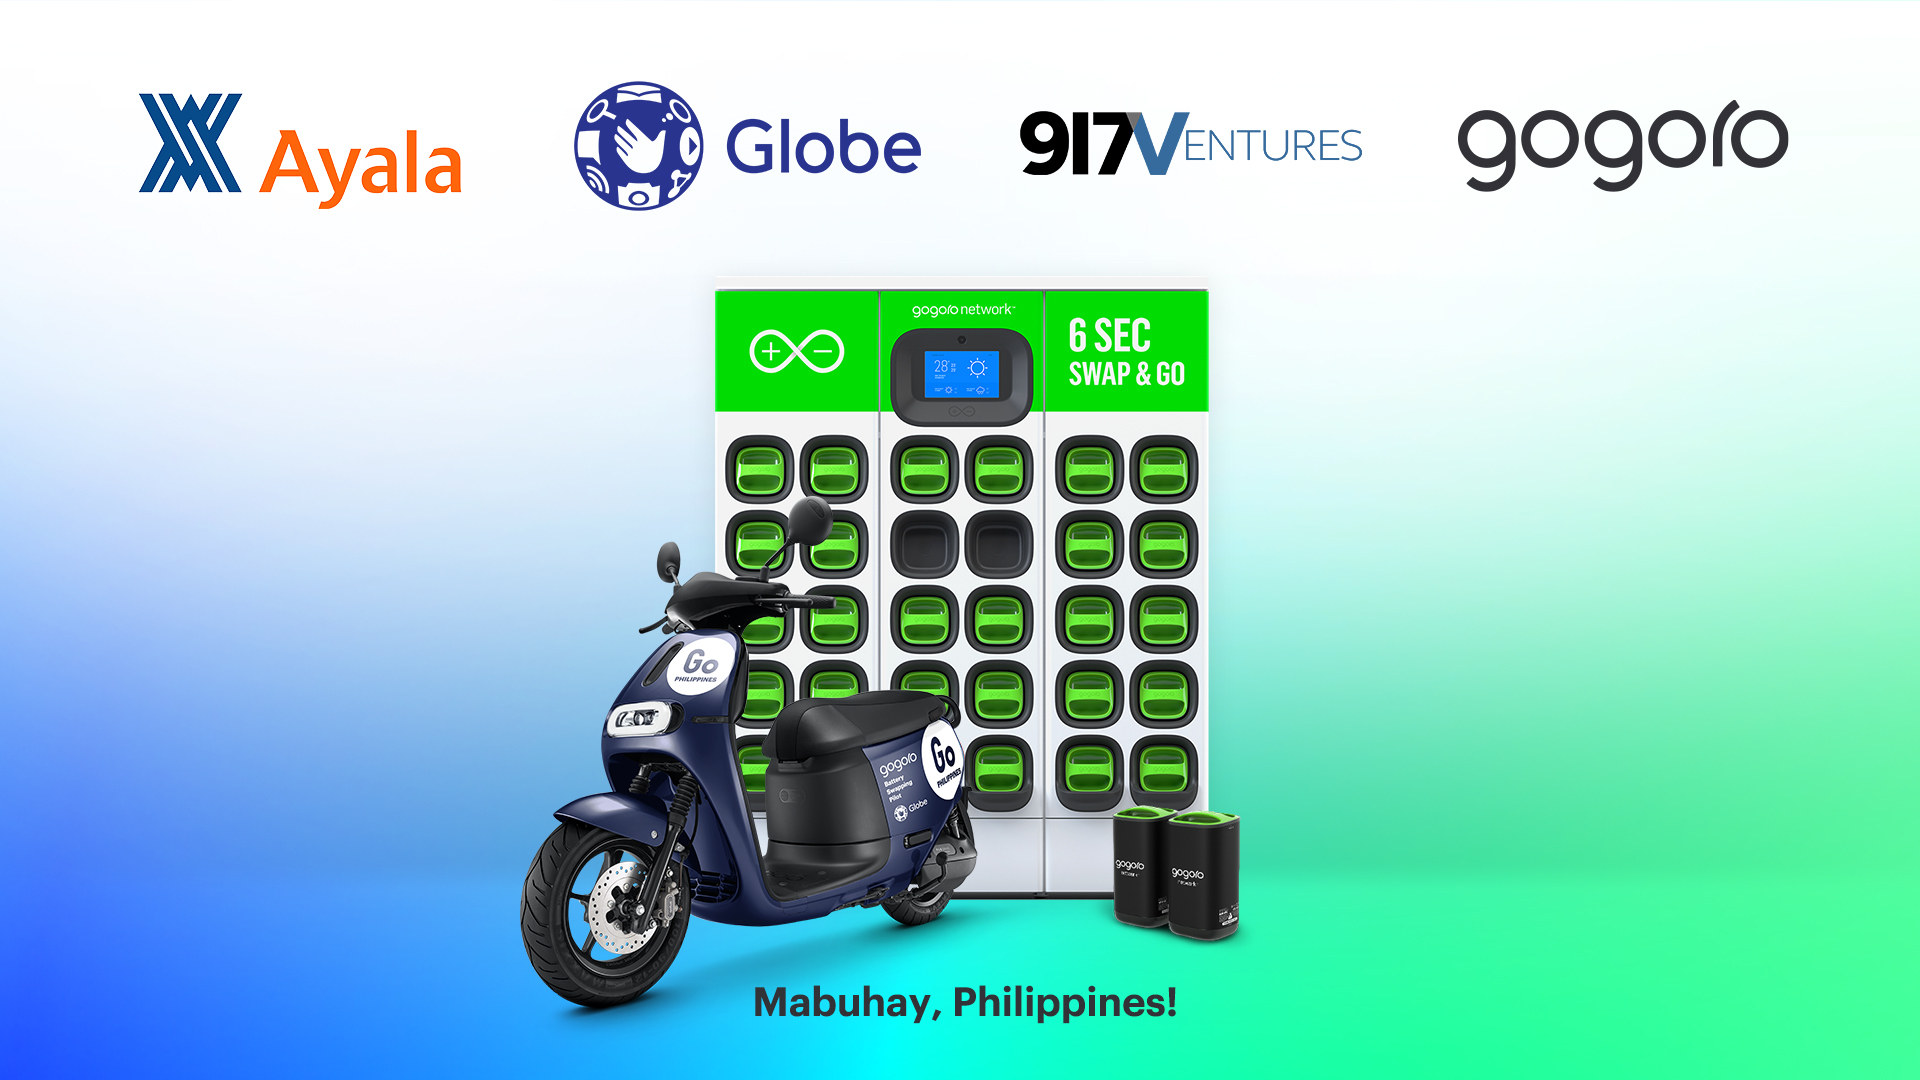 ​Gogoro 宣布与 Globe 旗下的 917Ventures 和 Ayala 集团成为合作伙伴　​正式将电池交换系统与智慧电动机车导入菲律宾市场。​Gogoro 提供